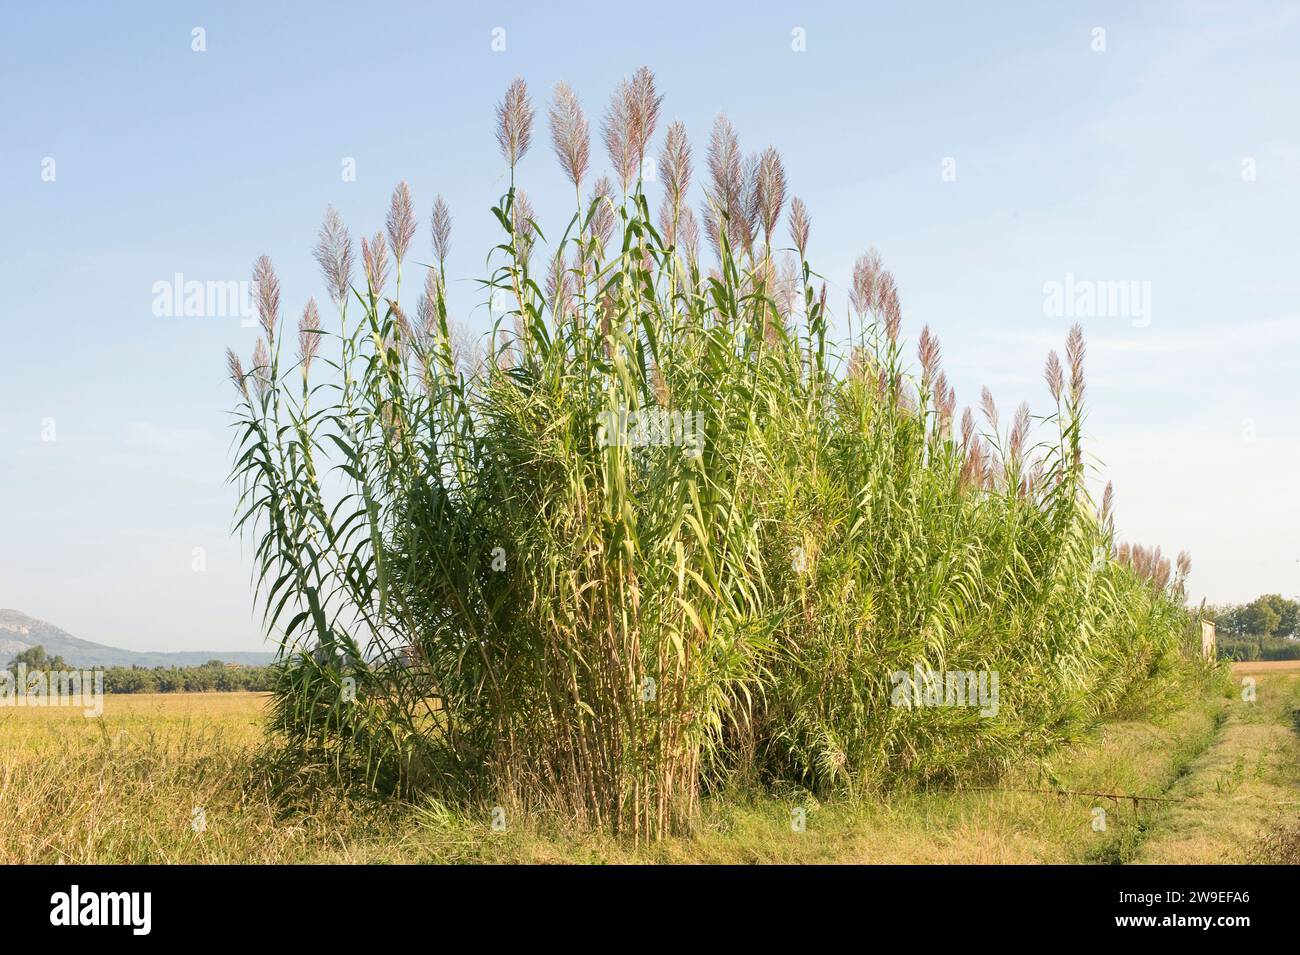 Giant cane, giant reed or wild cane (Arundo donax) is a perennial grass native to Mediterranean Basin. This photo was taken in Emporda, Girona provinc Stock Photo